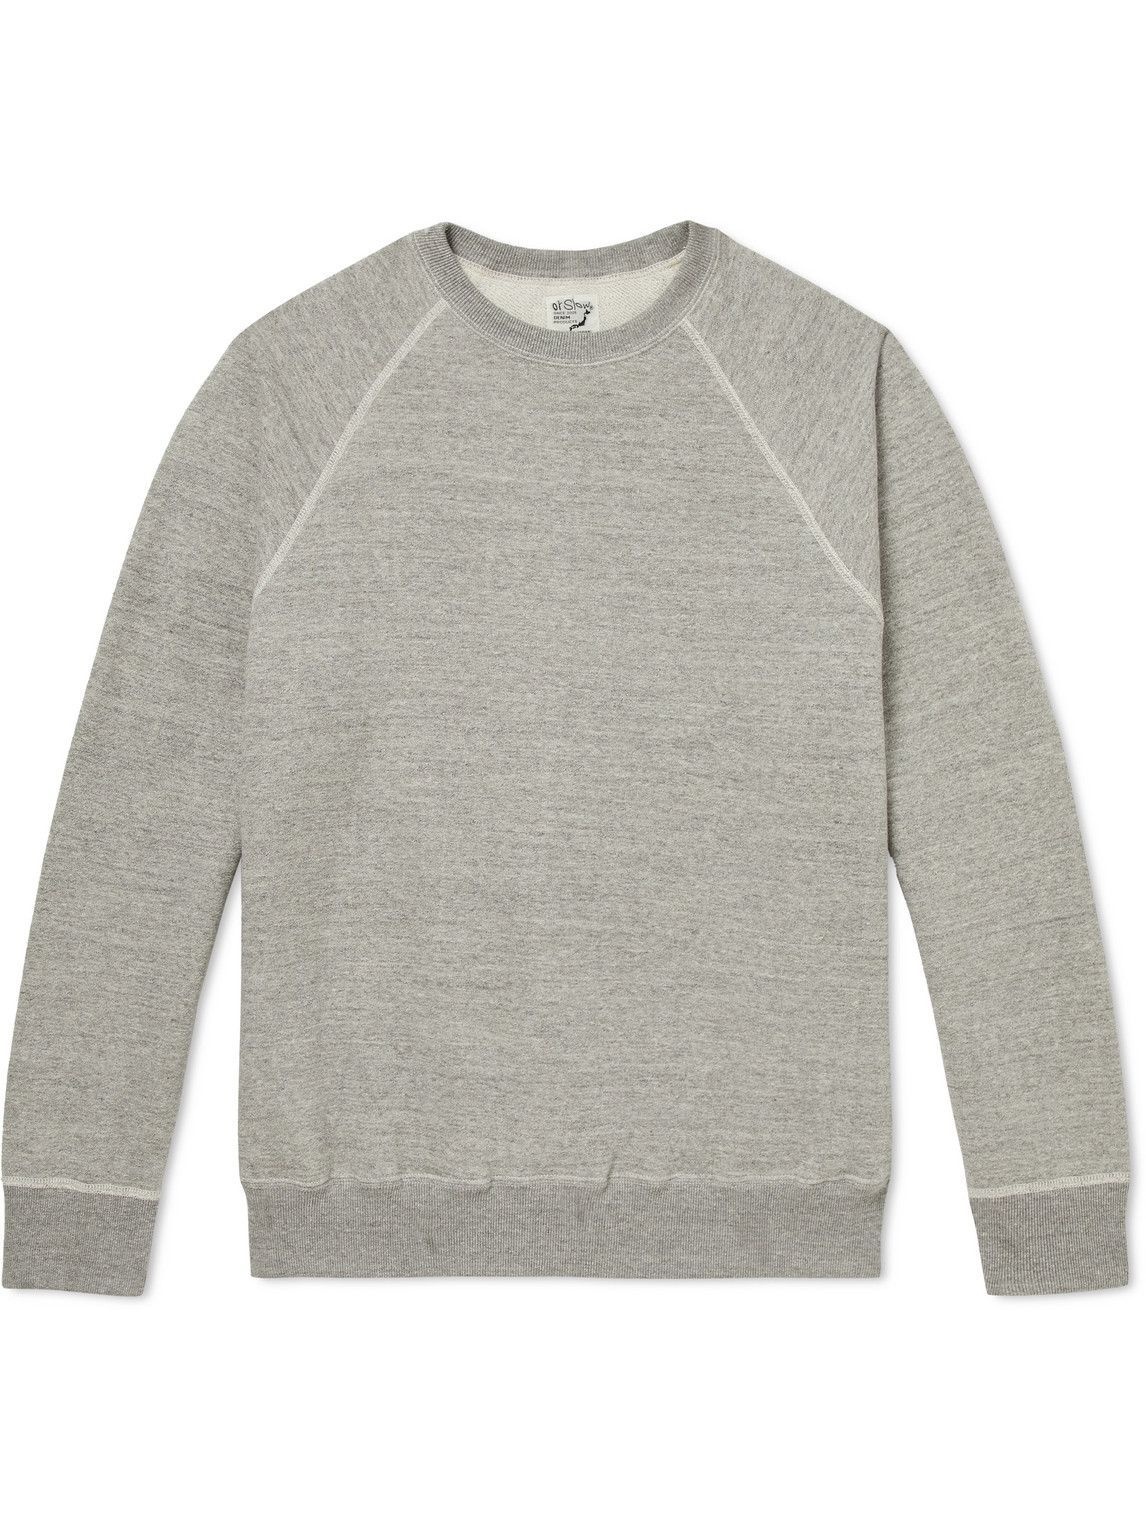 OrSlow - Cotton-Jersey Sweatshirt - Gray orSlow